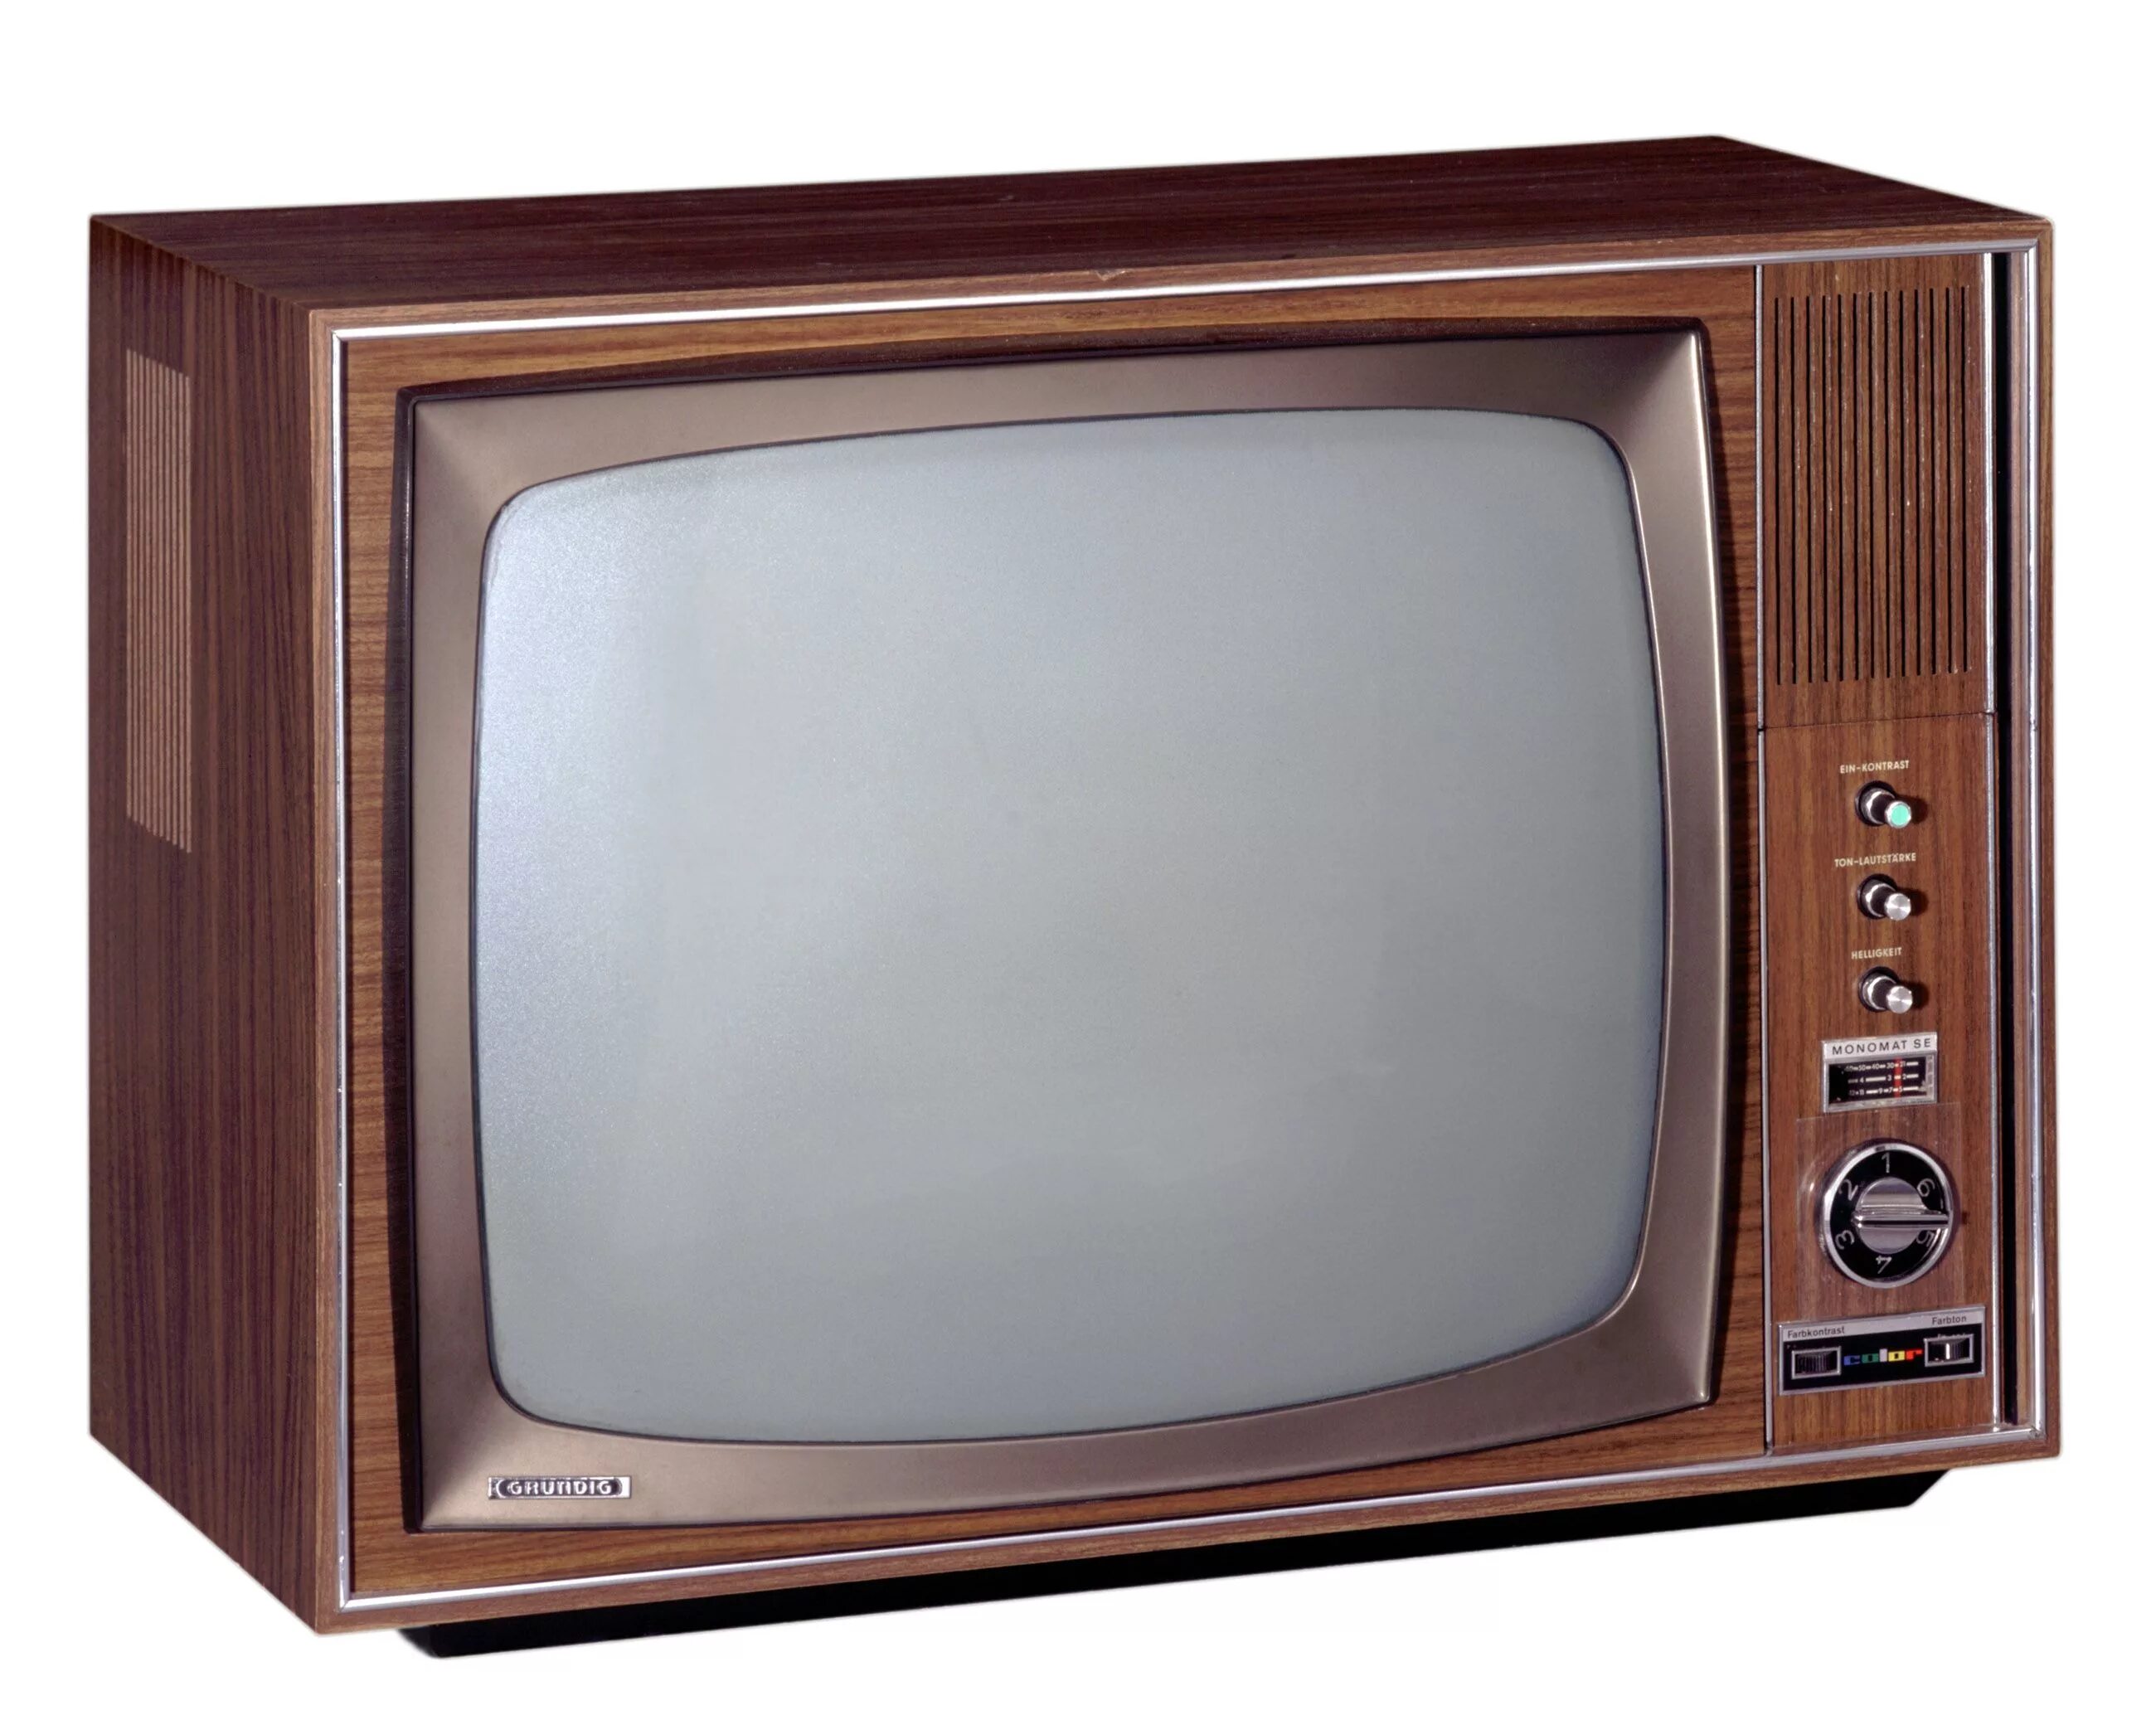 Tv old 2. Грюндик телевизор Винтаж. Телевизор Грюндик ламповый. Телевизор Грюндиг старый. Грюндик телевизор старые телевизоры.